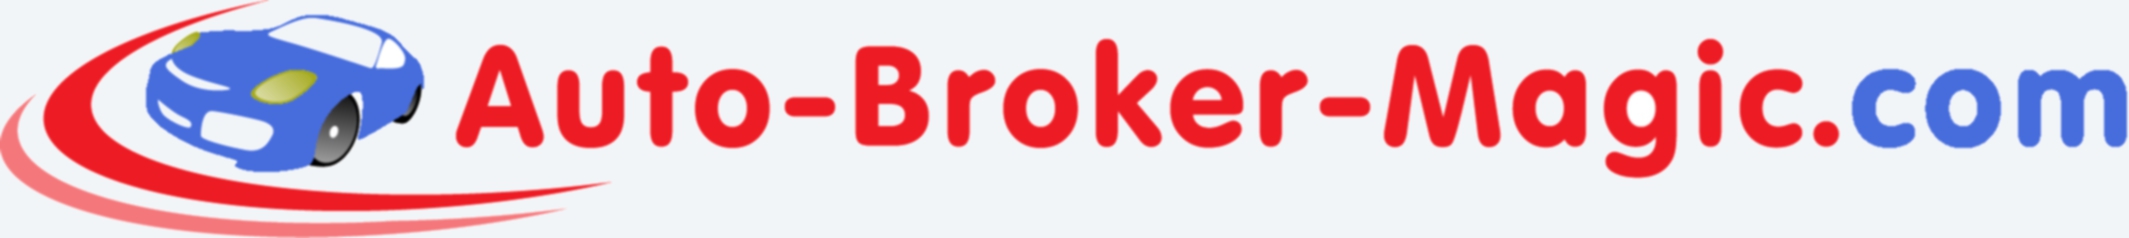 Auto Broker Magic Logo